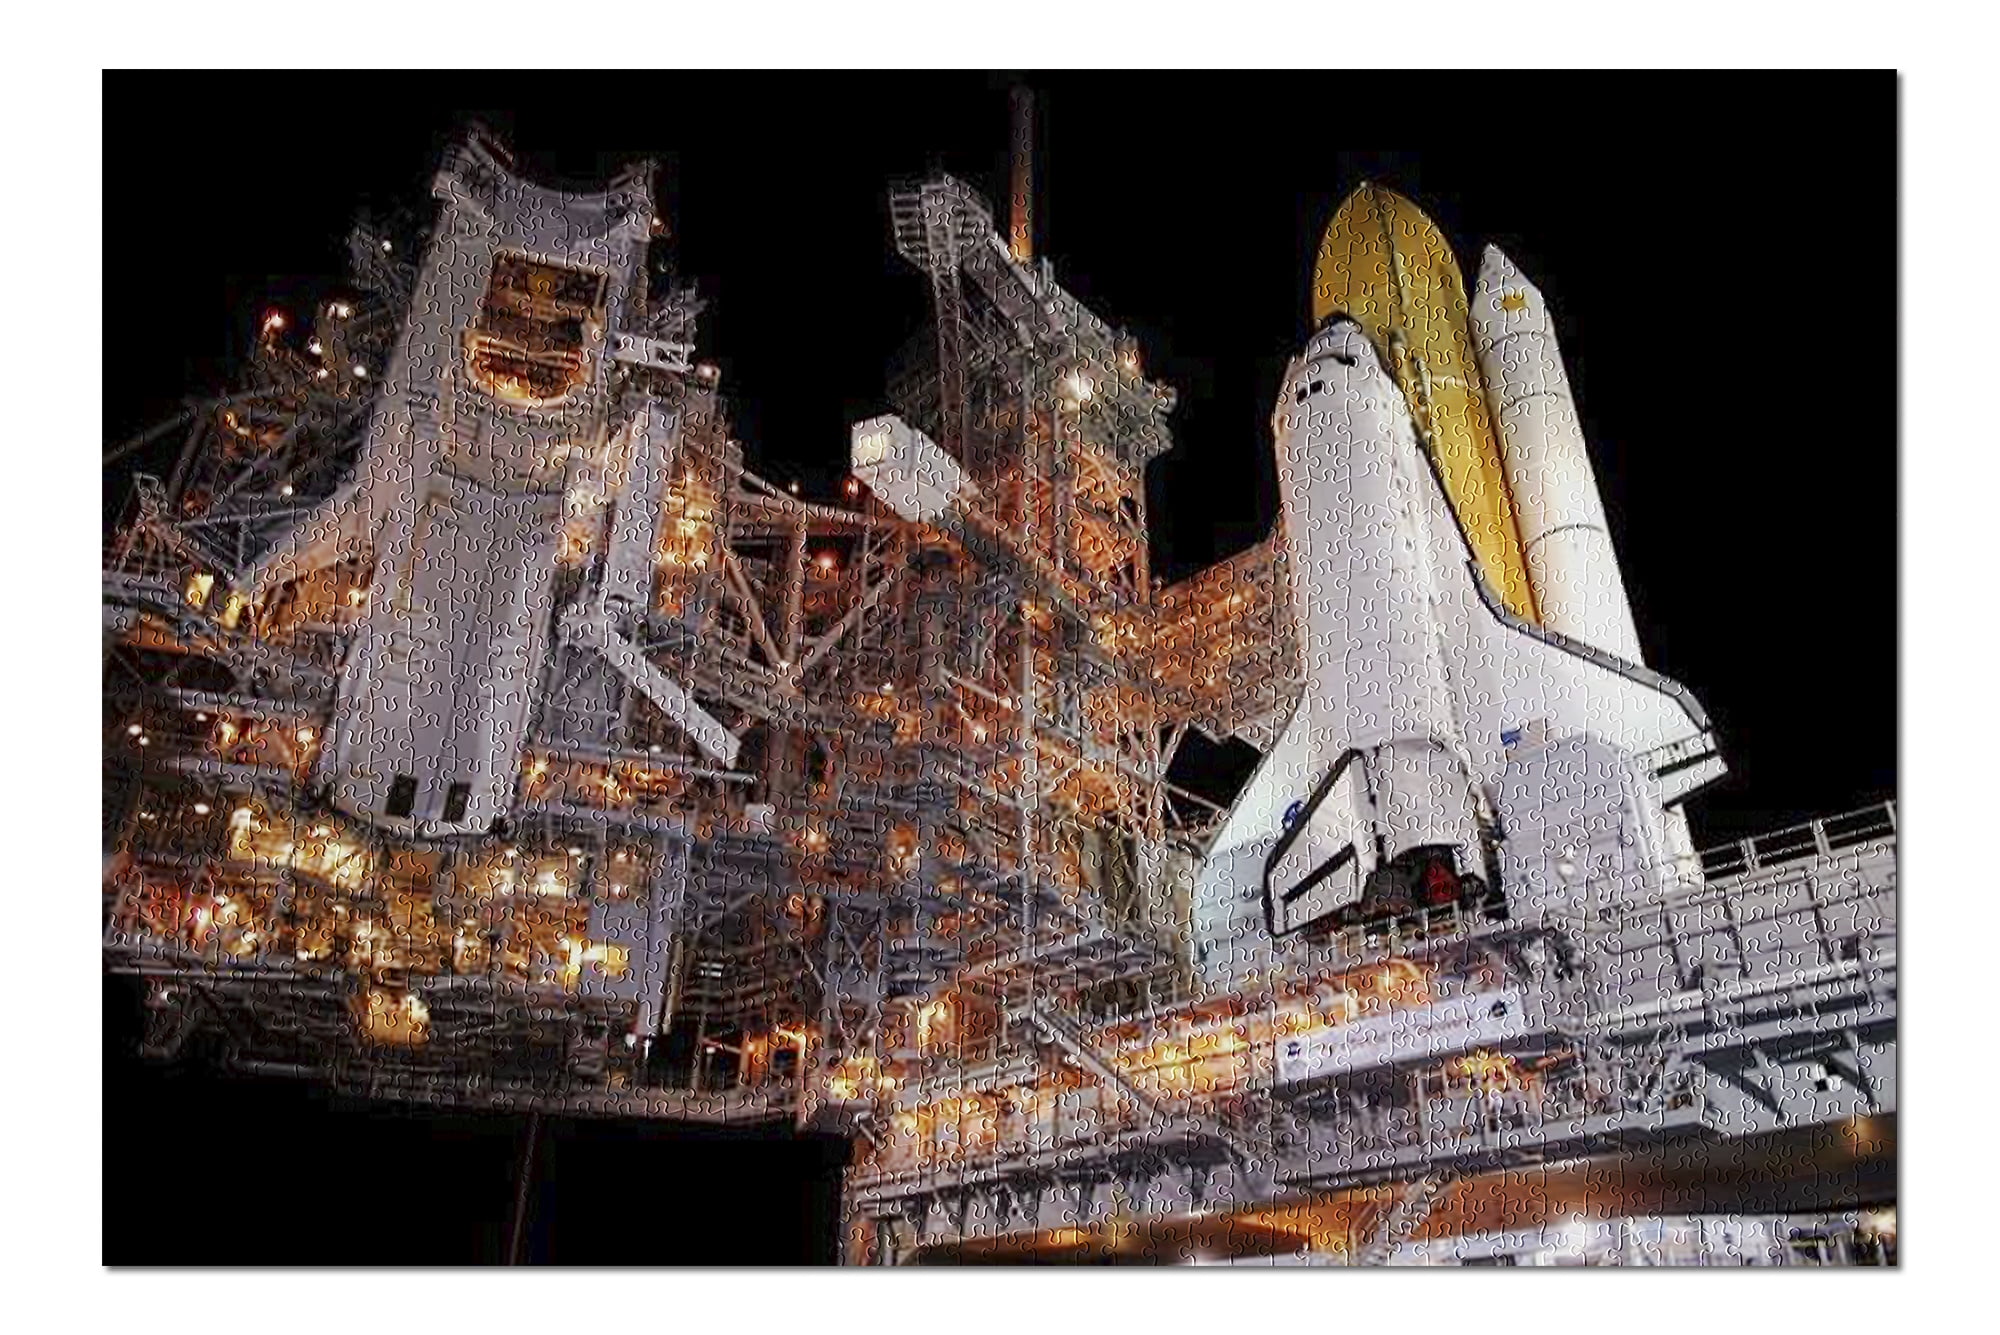 nasa space shuttle launch time